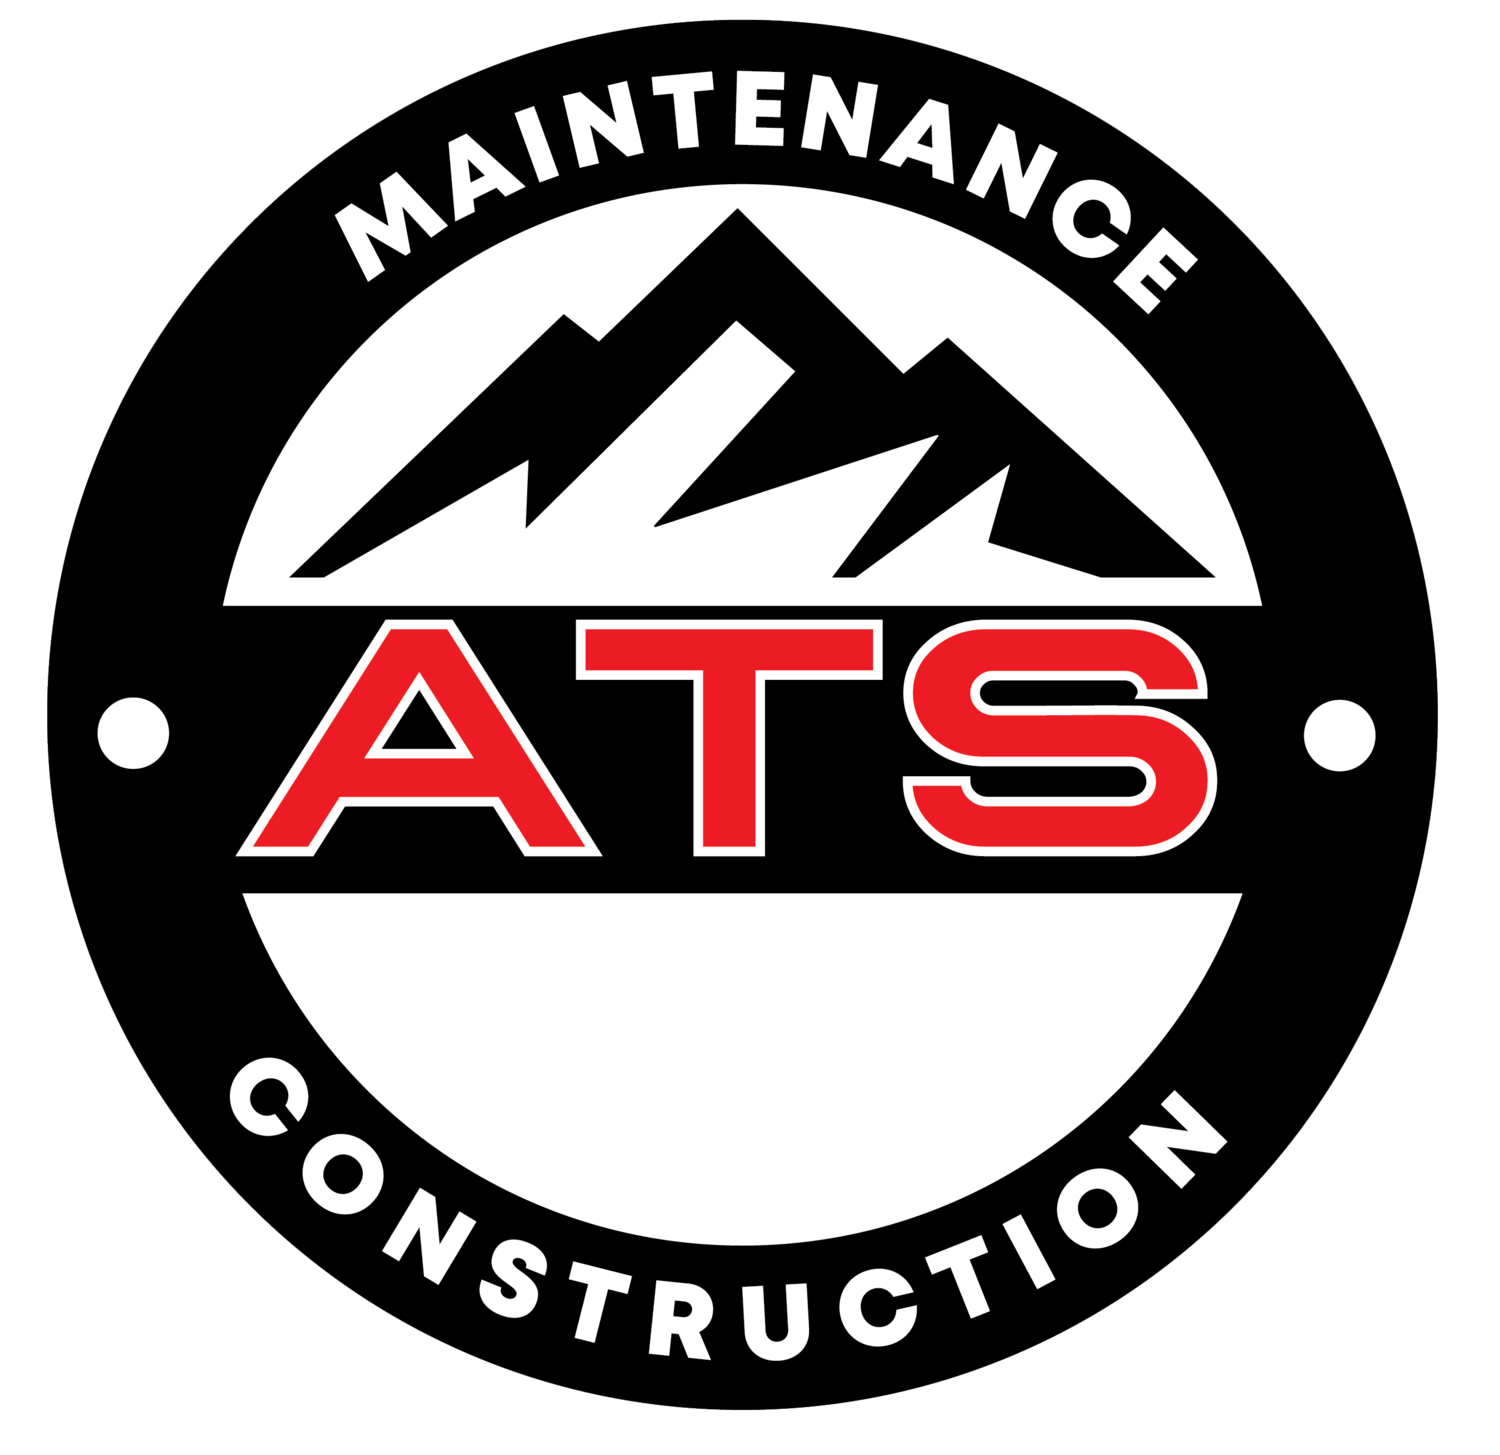 Alaska Technical Services Maintenance and Construction